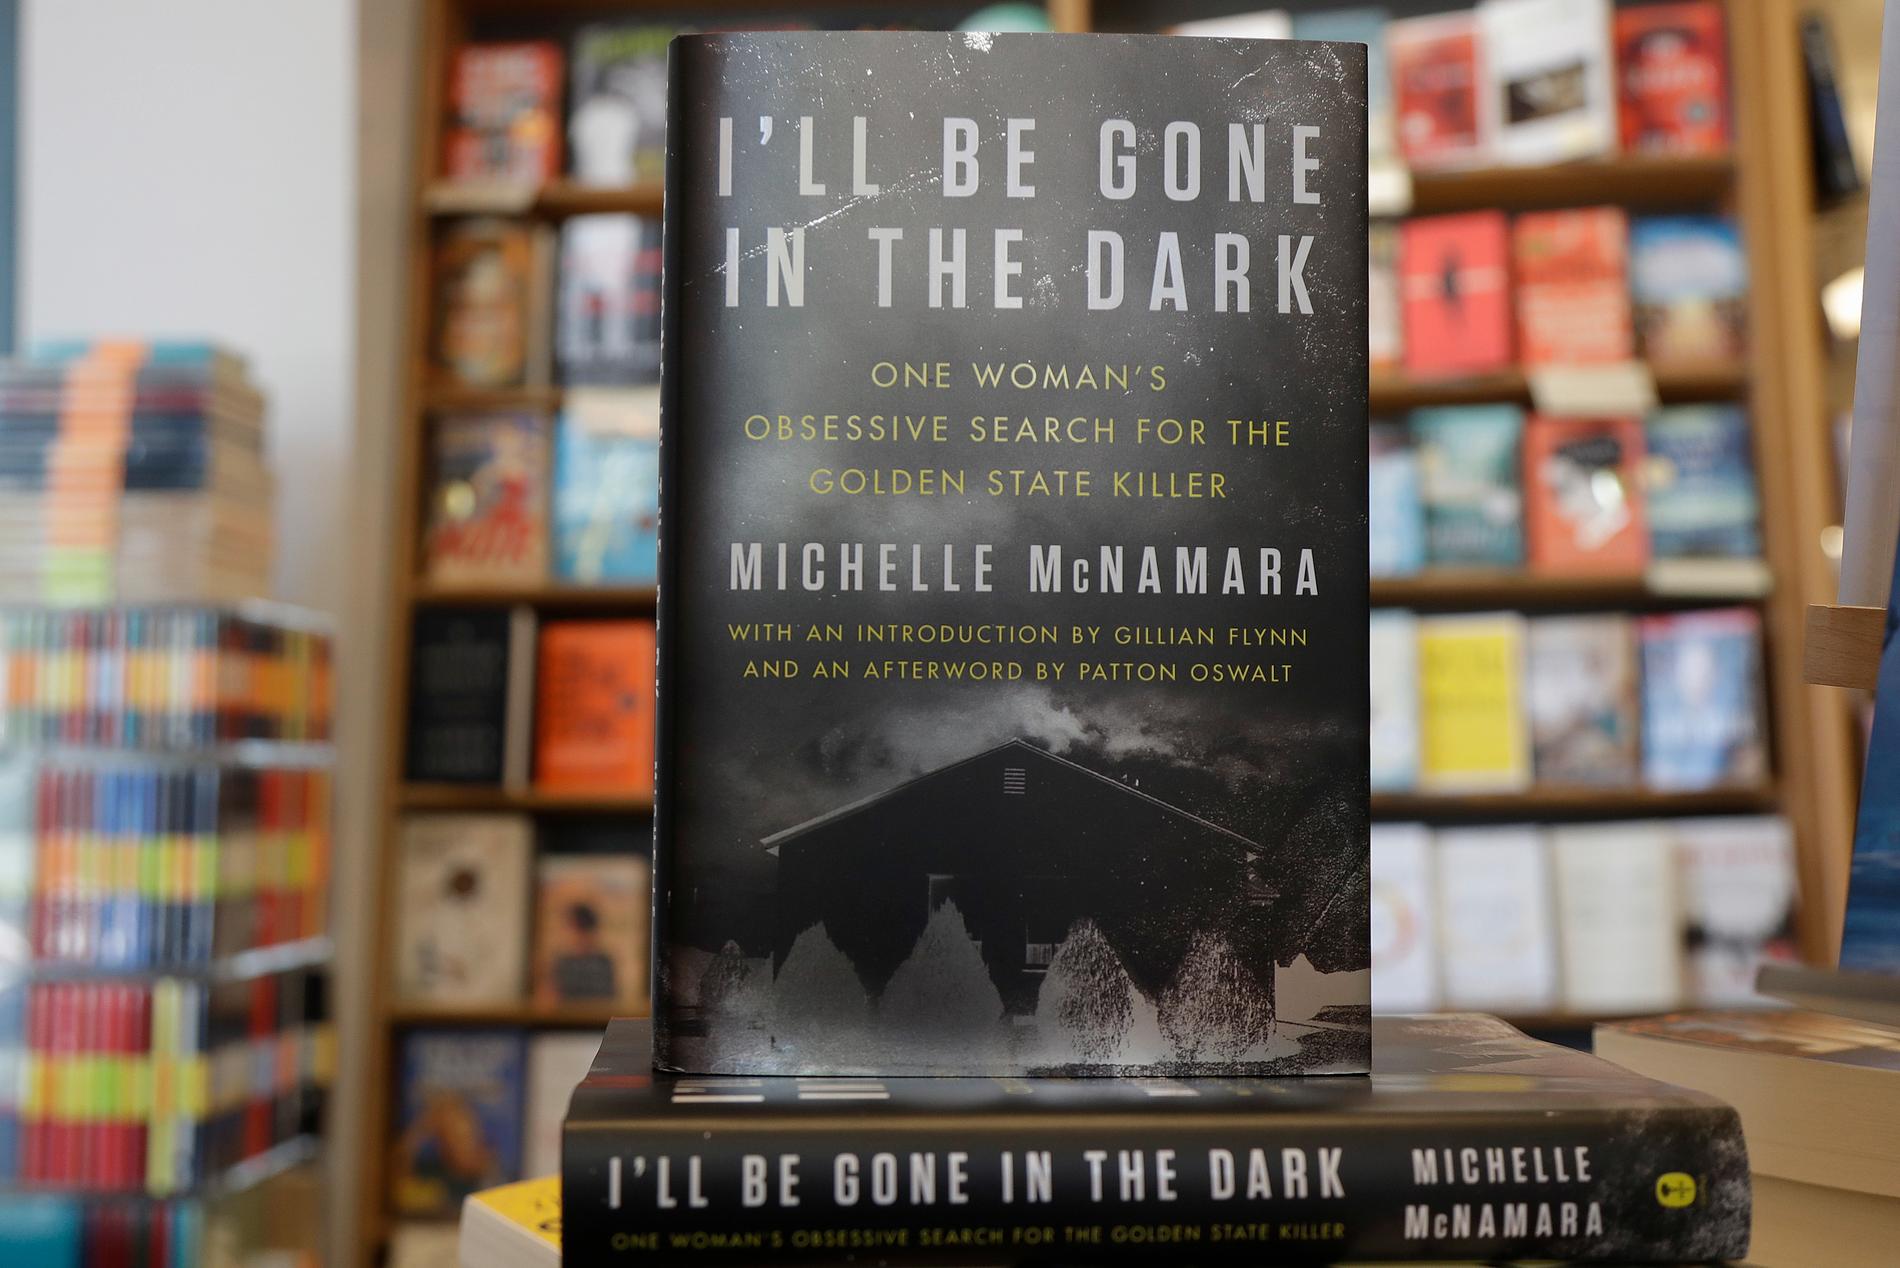 Boken "I'll Be Gone in the Dark" av Michelle McNamara, som hann avlida innan den kom ut.